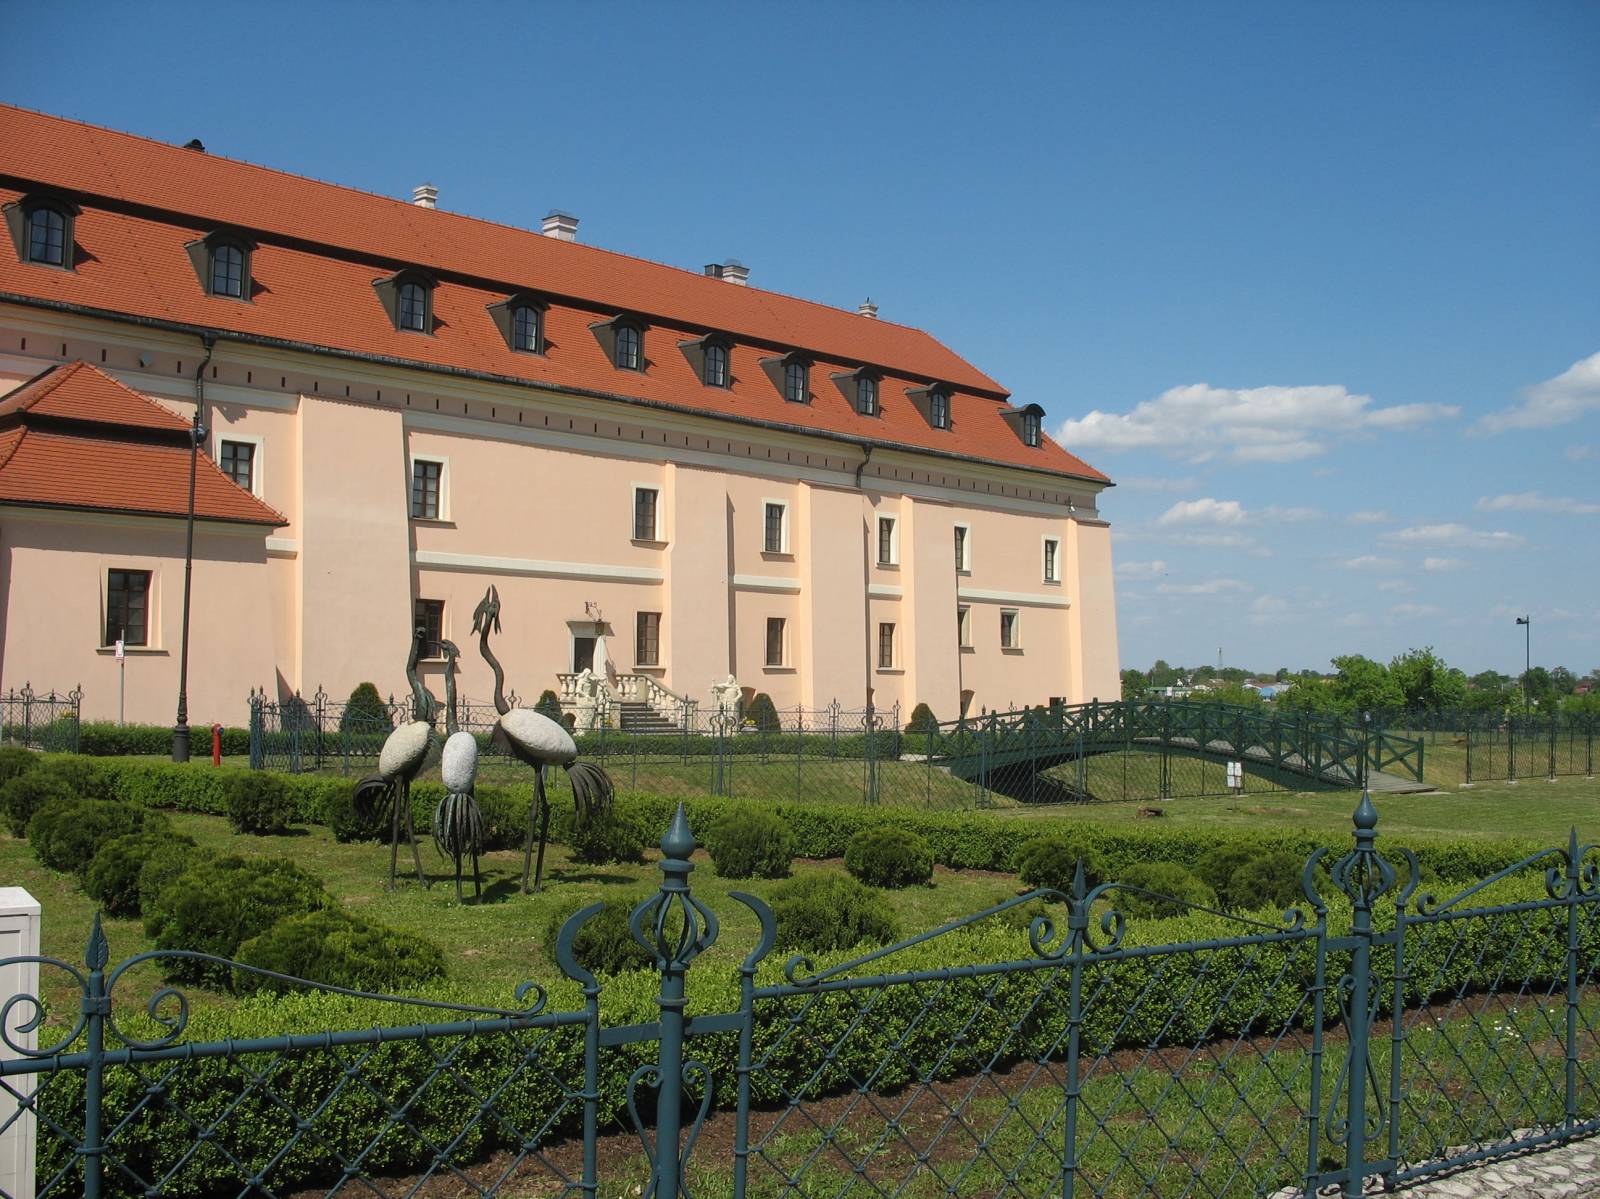 Royal Castle in Niepołomice